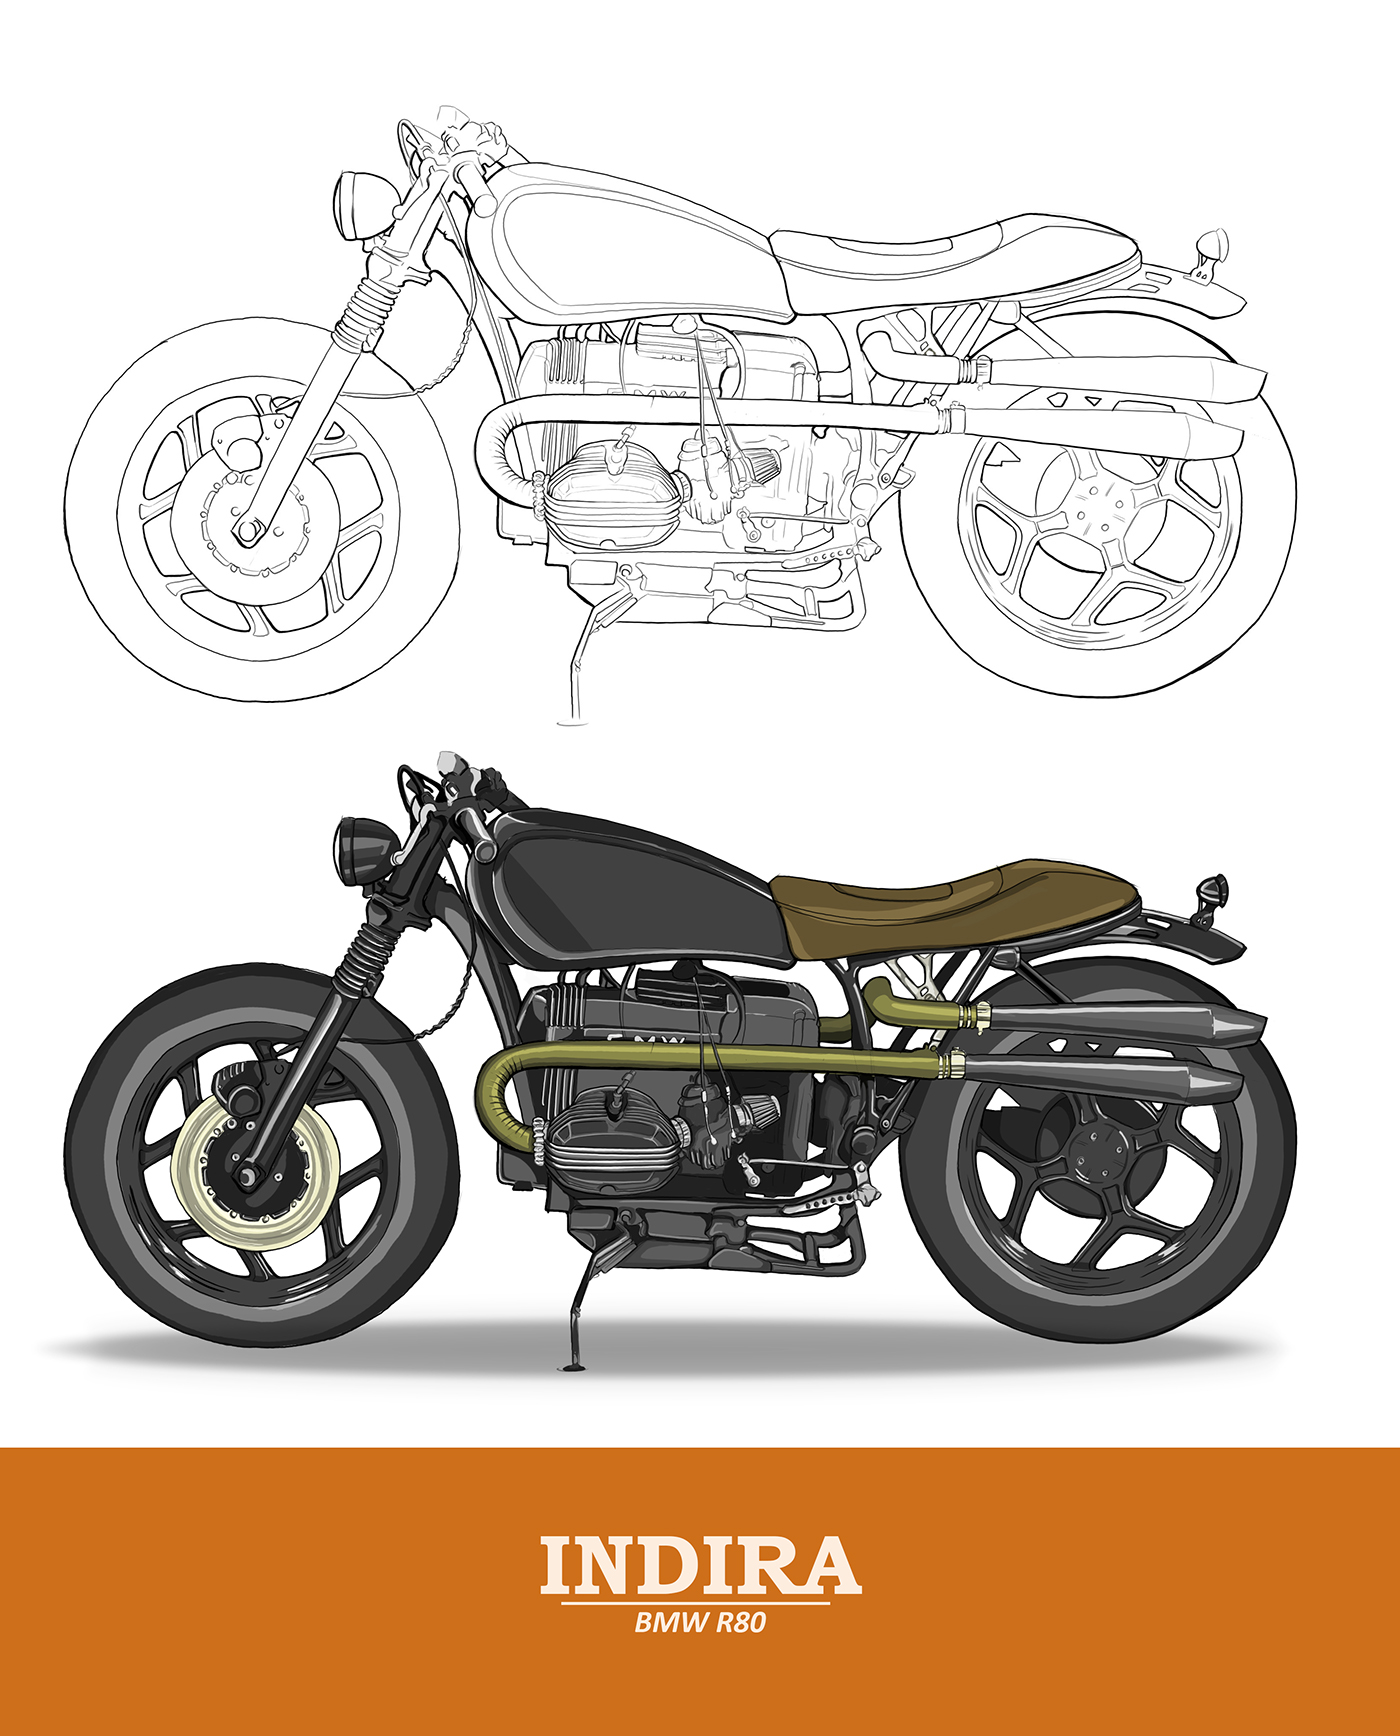 BMW indira custombike motorcycle ton-up vintagebikes photoshop Render sketch lineweight industrialdesign productdesign purdue purdueuniversity